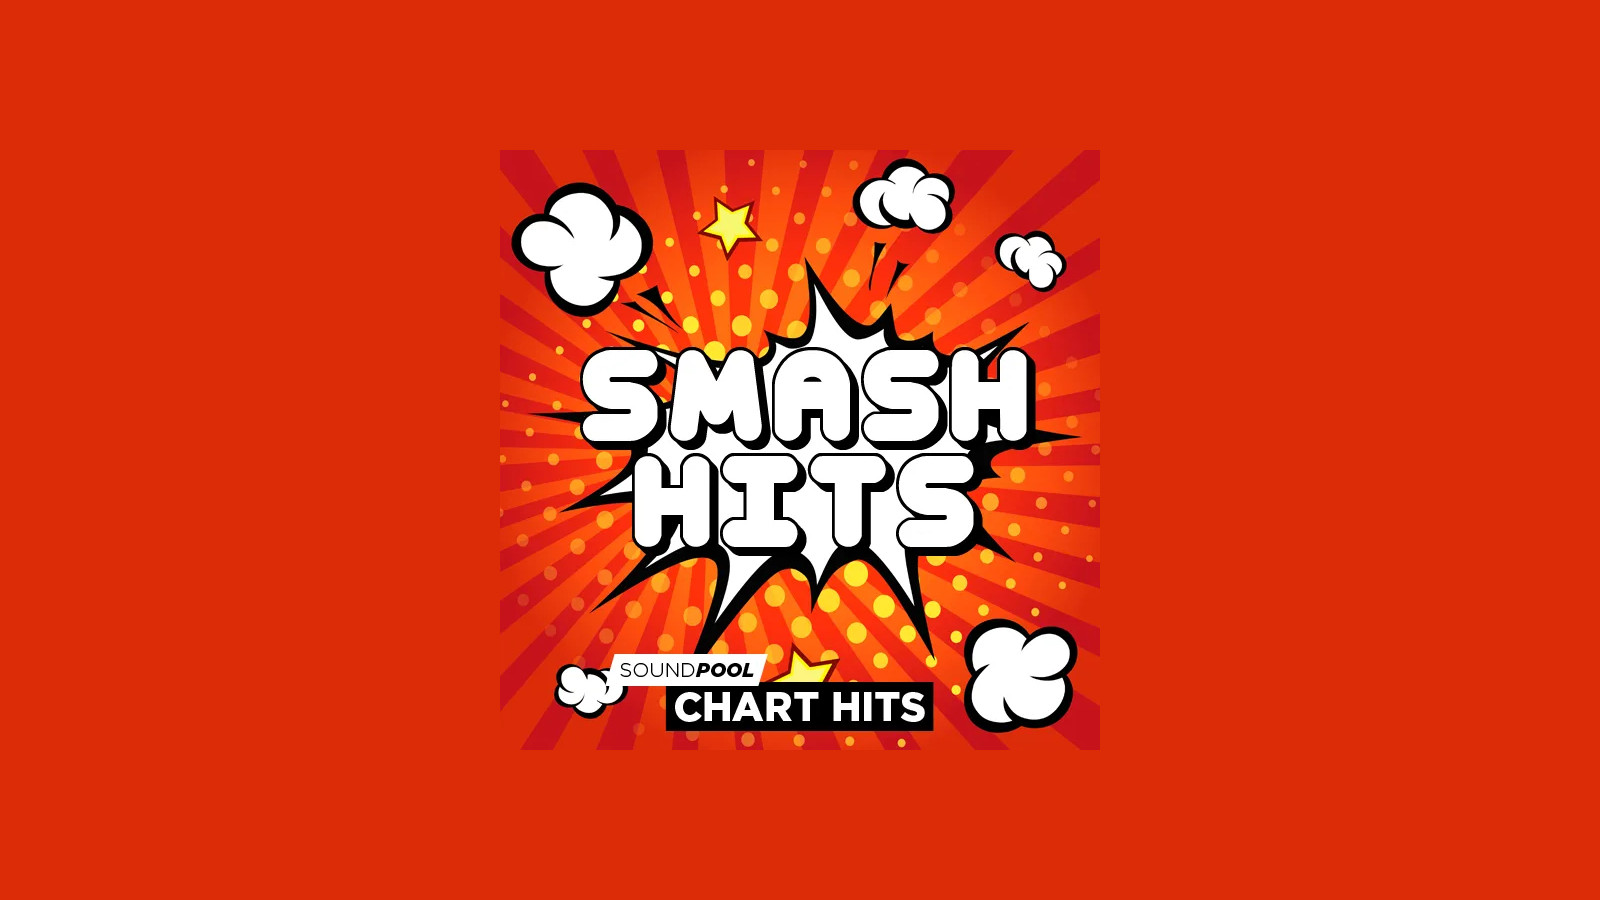 MAGIX Soundpool Smash Hits ProducerPlanet CD Key, $5.65